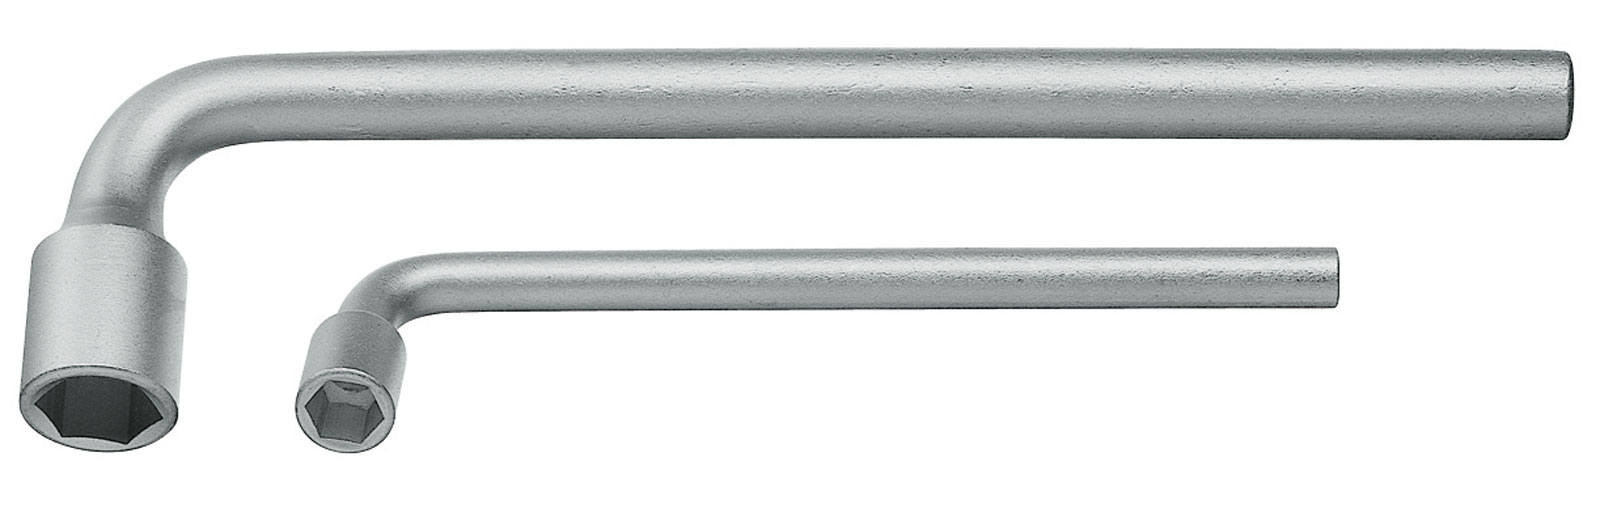 Picture of 25 10 Steckschlüssel extra tief 6-kant 10 mm